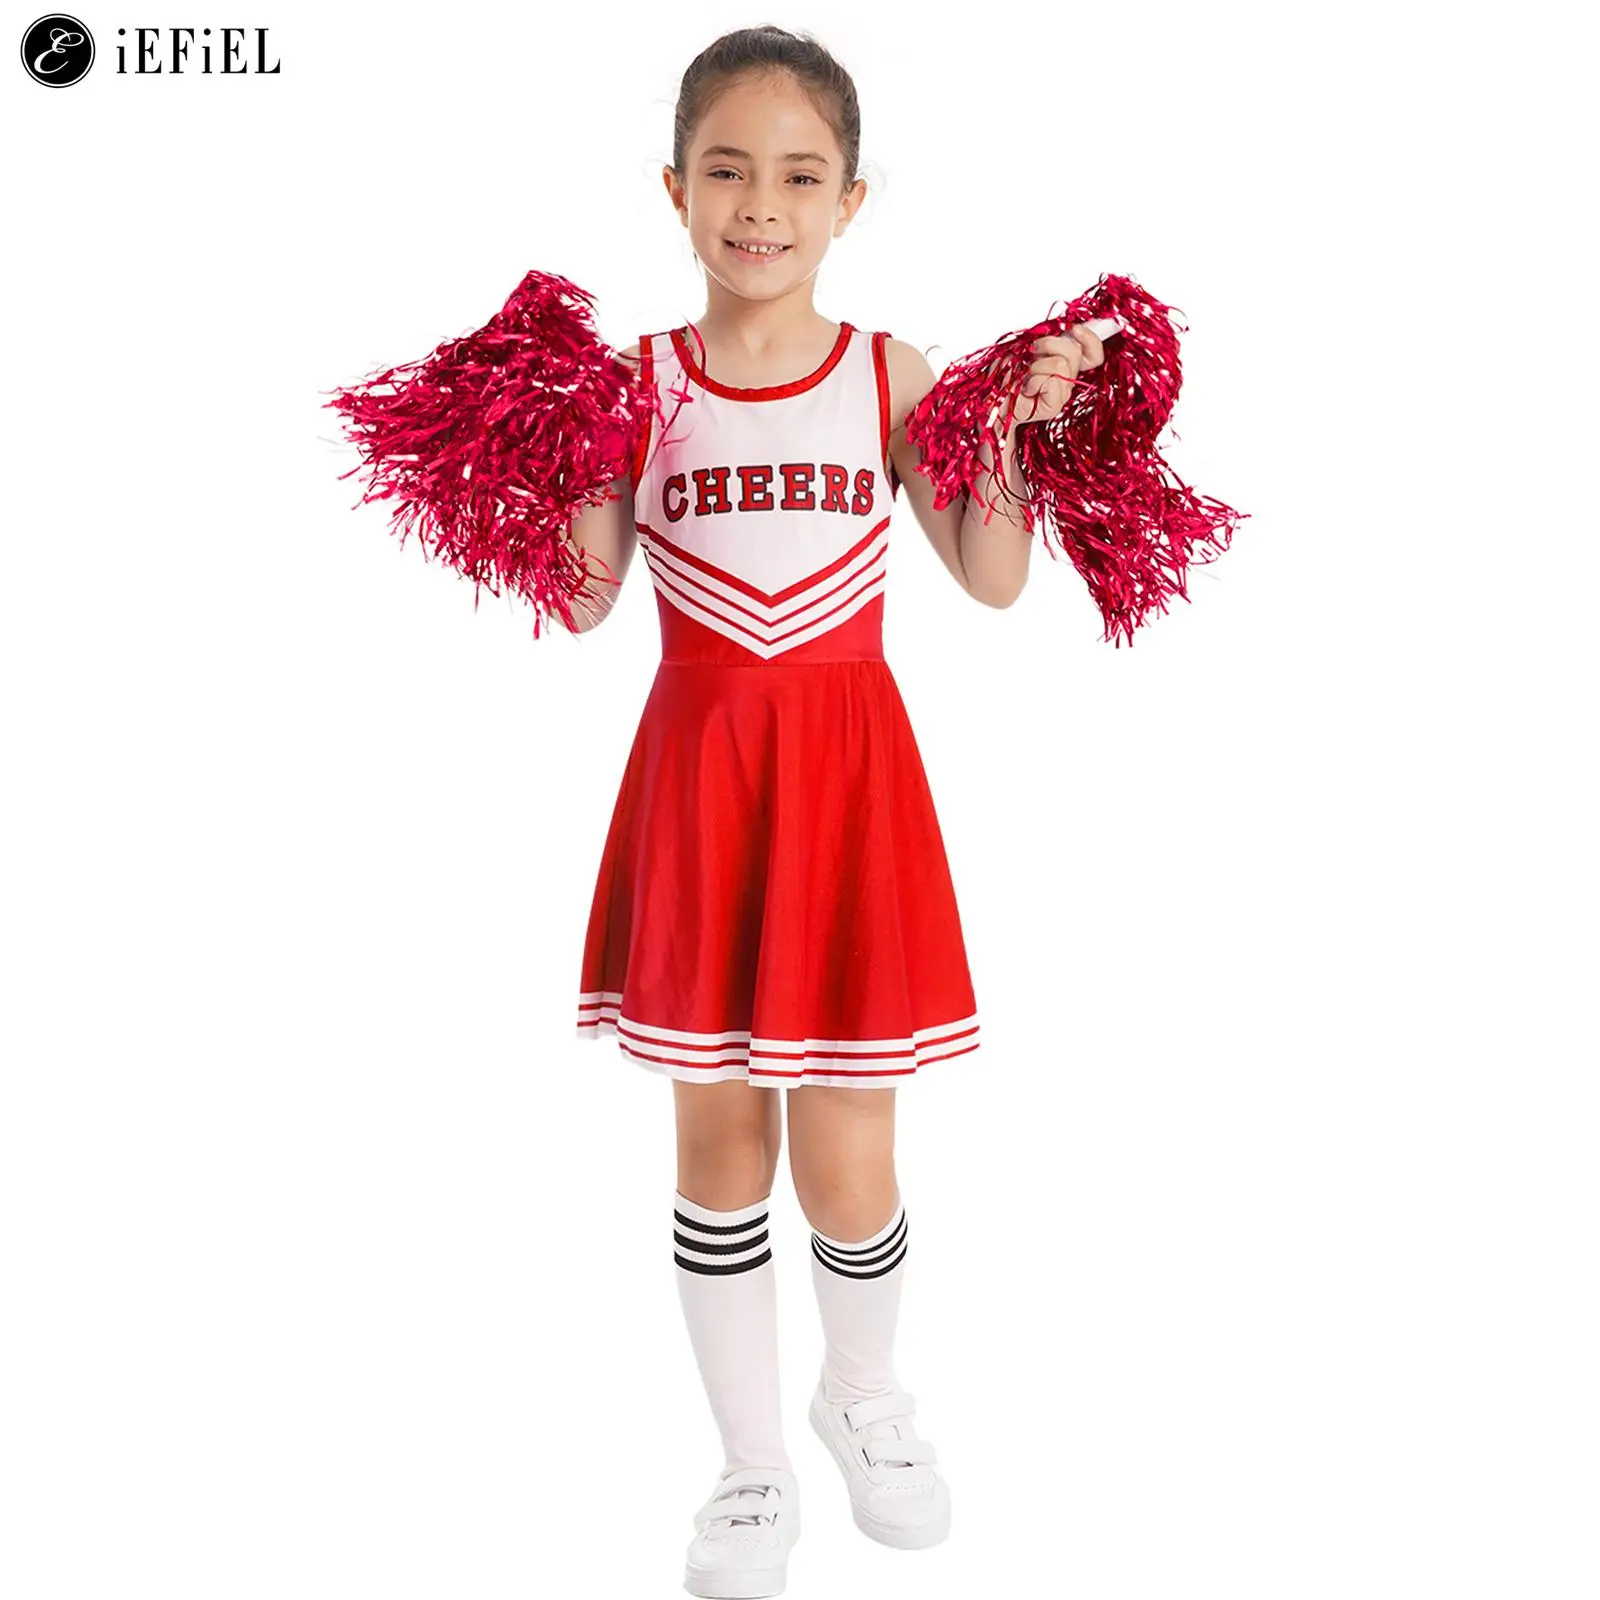 

High Schoolgirls Cheer Leader Uniform Dance Cheerleading Dress Outfit with Stockings 2 Pom Poms Halloween Cosplay Costume